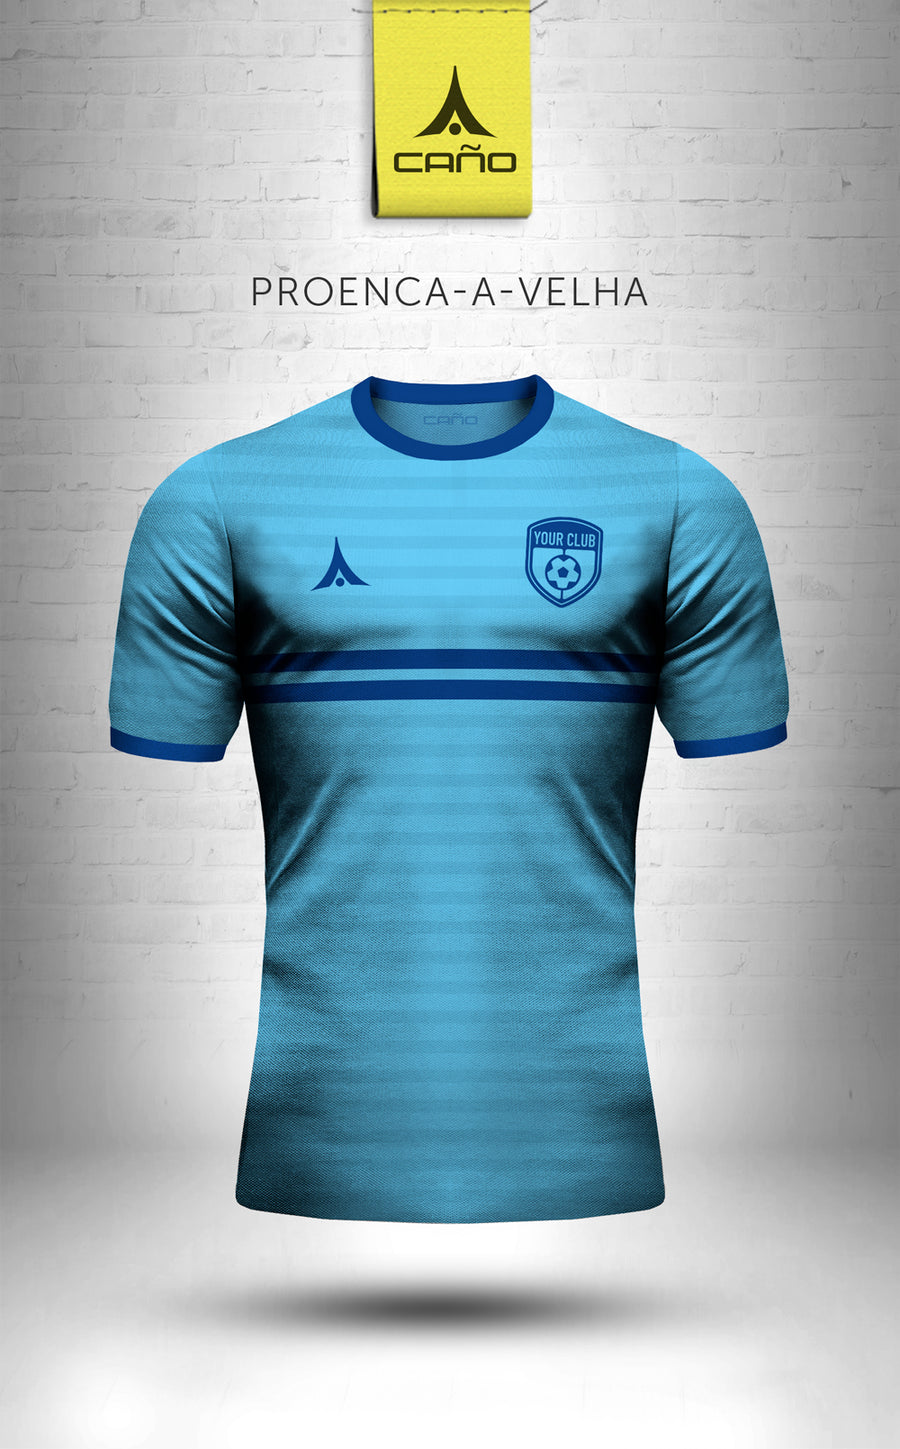 Proenca-a-Velha in light blue/blue